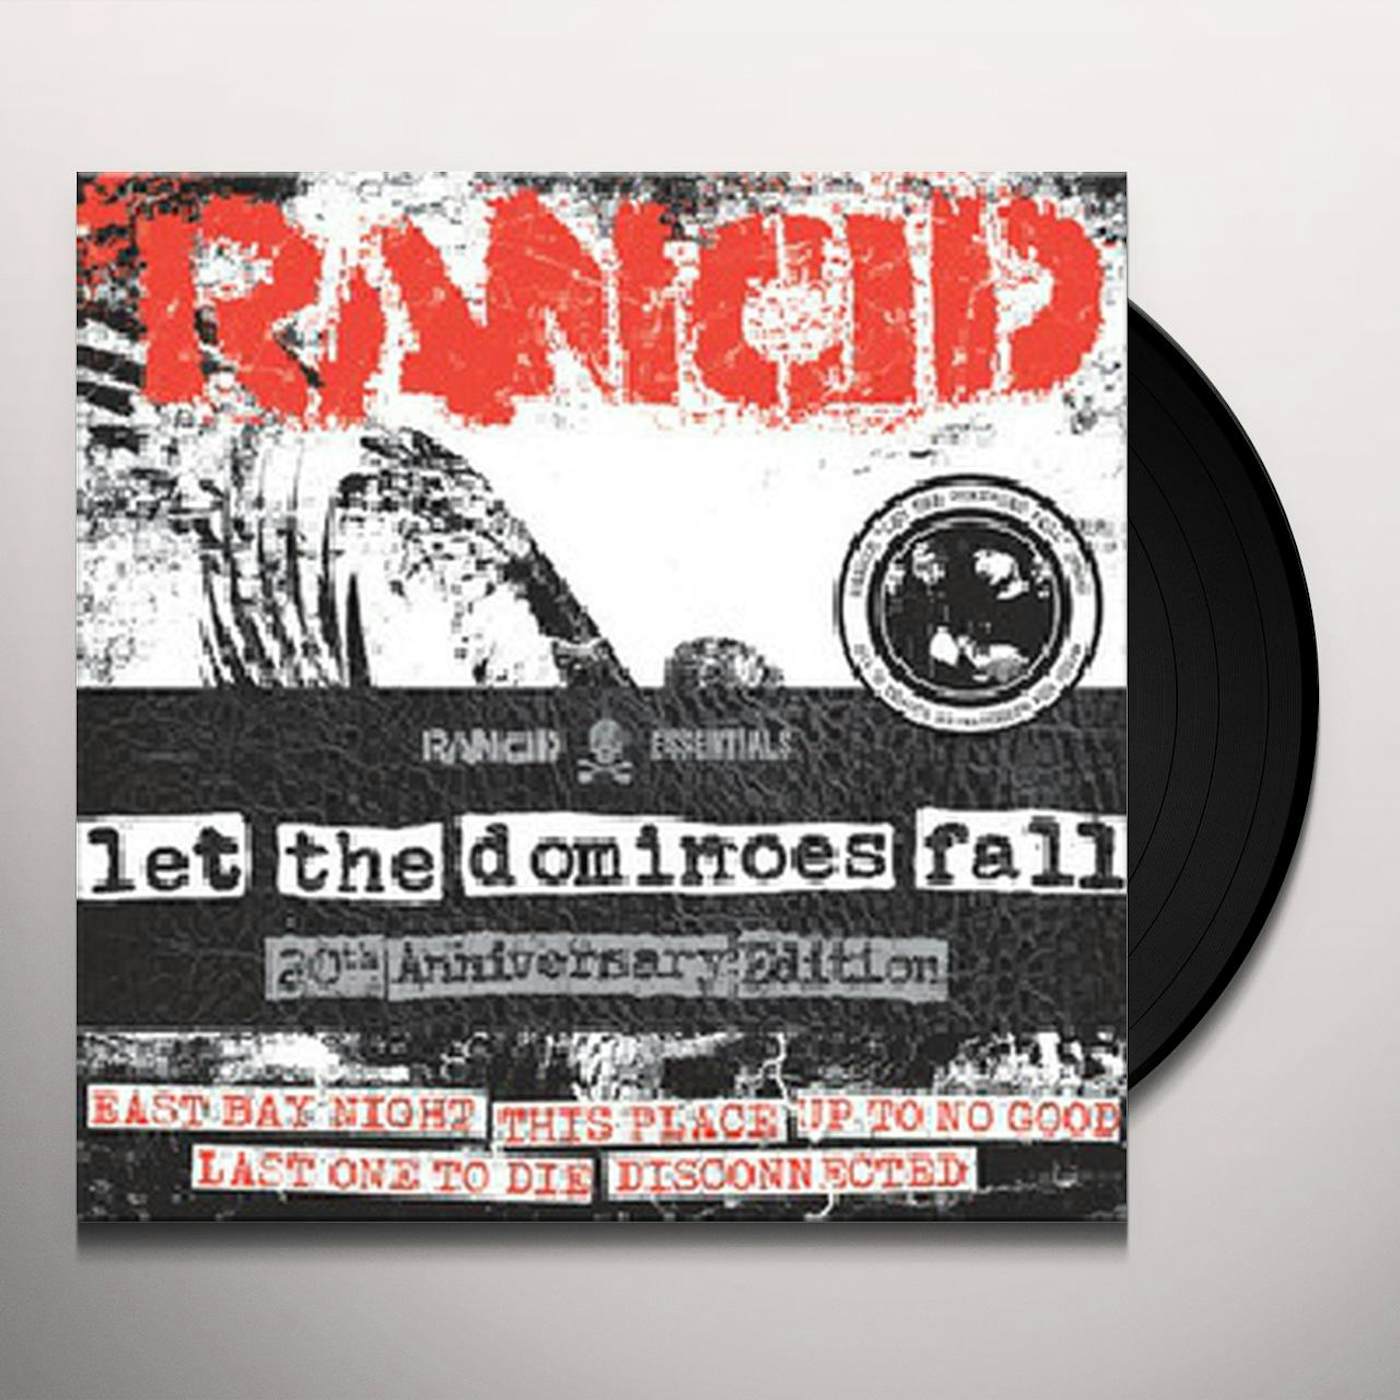 LET THE DOMINOES FALL (RANCID ESSENTIALS 8X7 INCH Vinyl Record